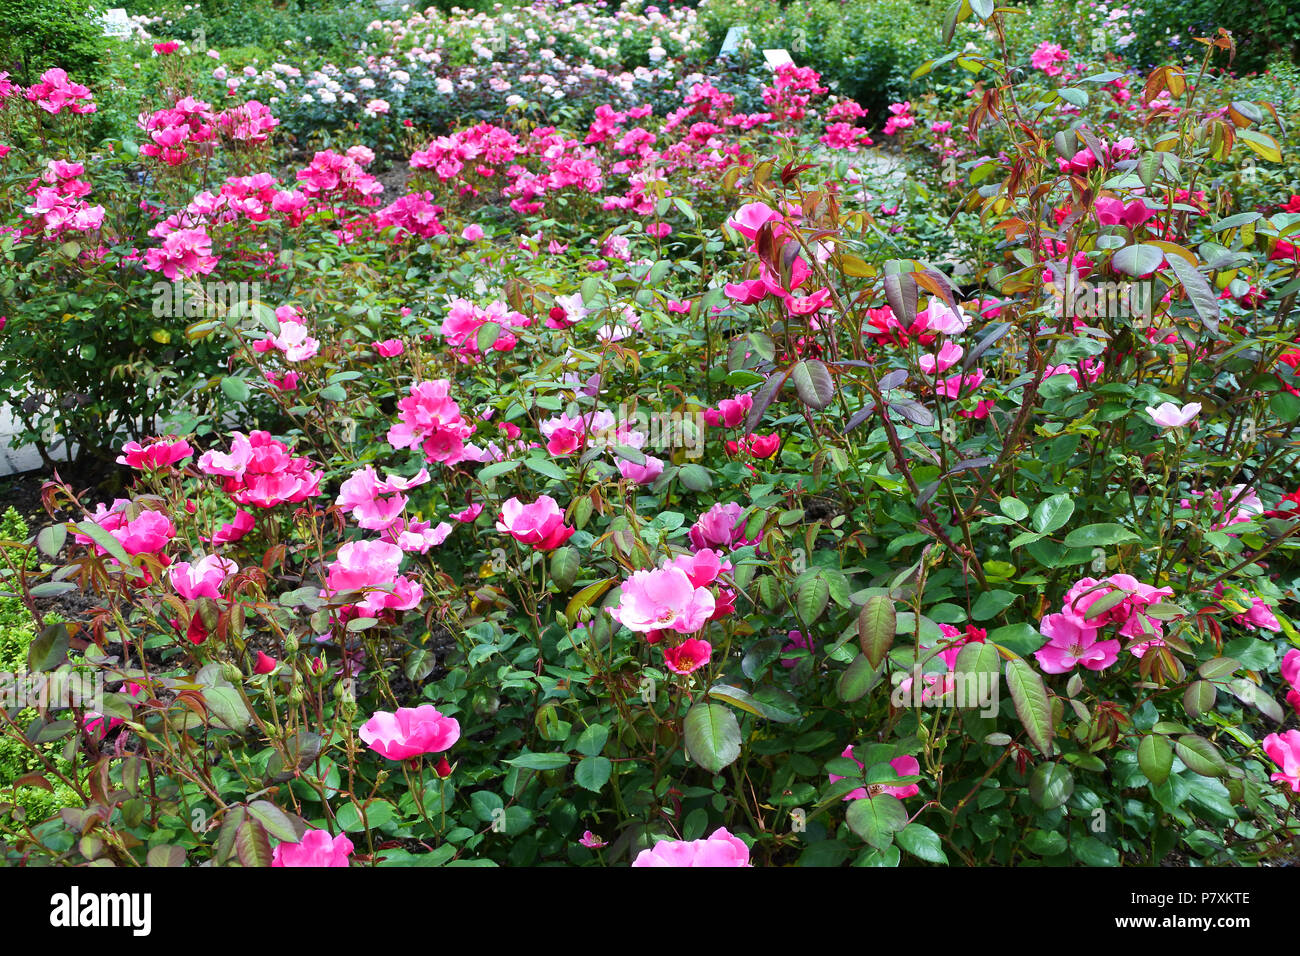 Flowering roses at RHS Rosemoor Gardens, Devon, UK - John Gollop Stock Photo